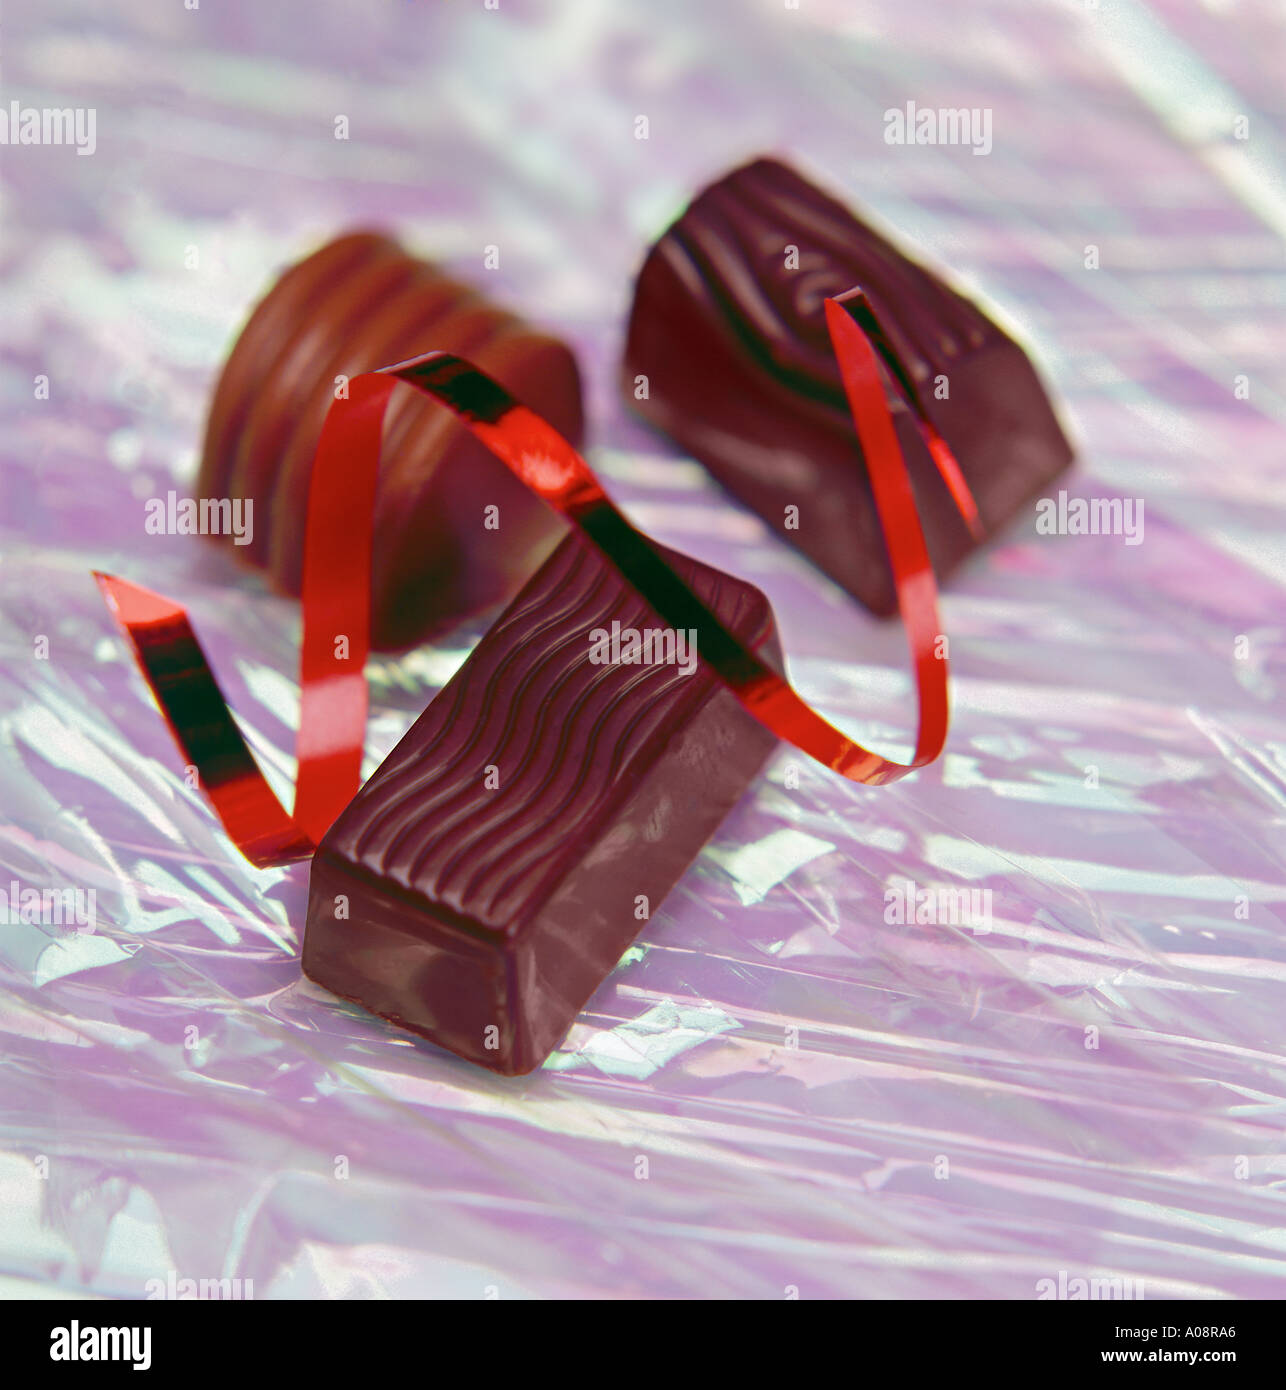 chocolates & festive ribbon, Stock Photo